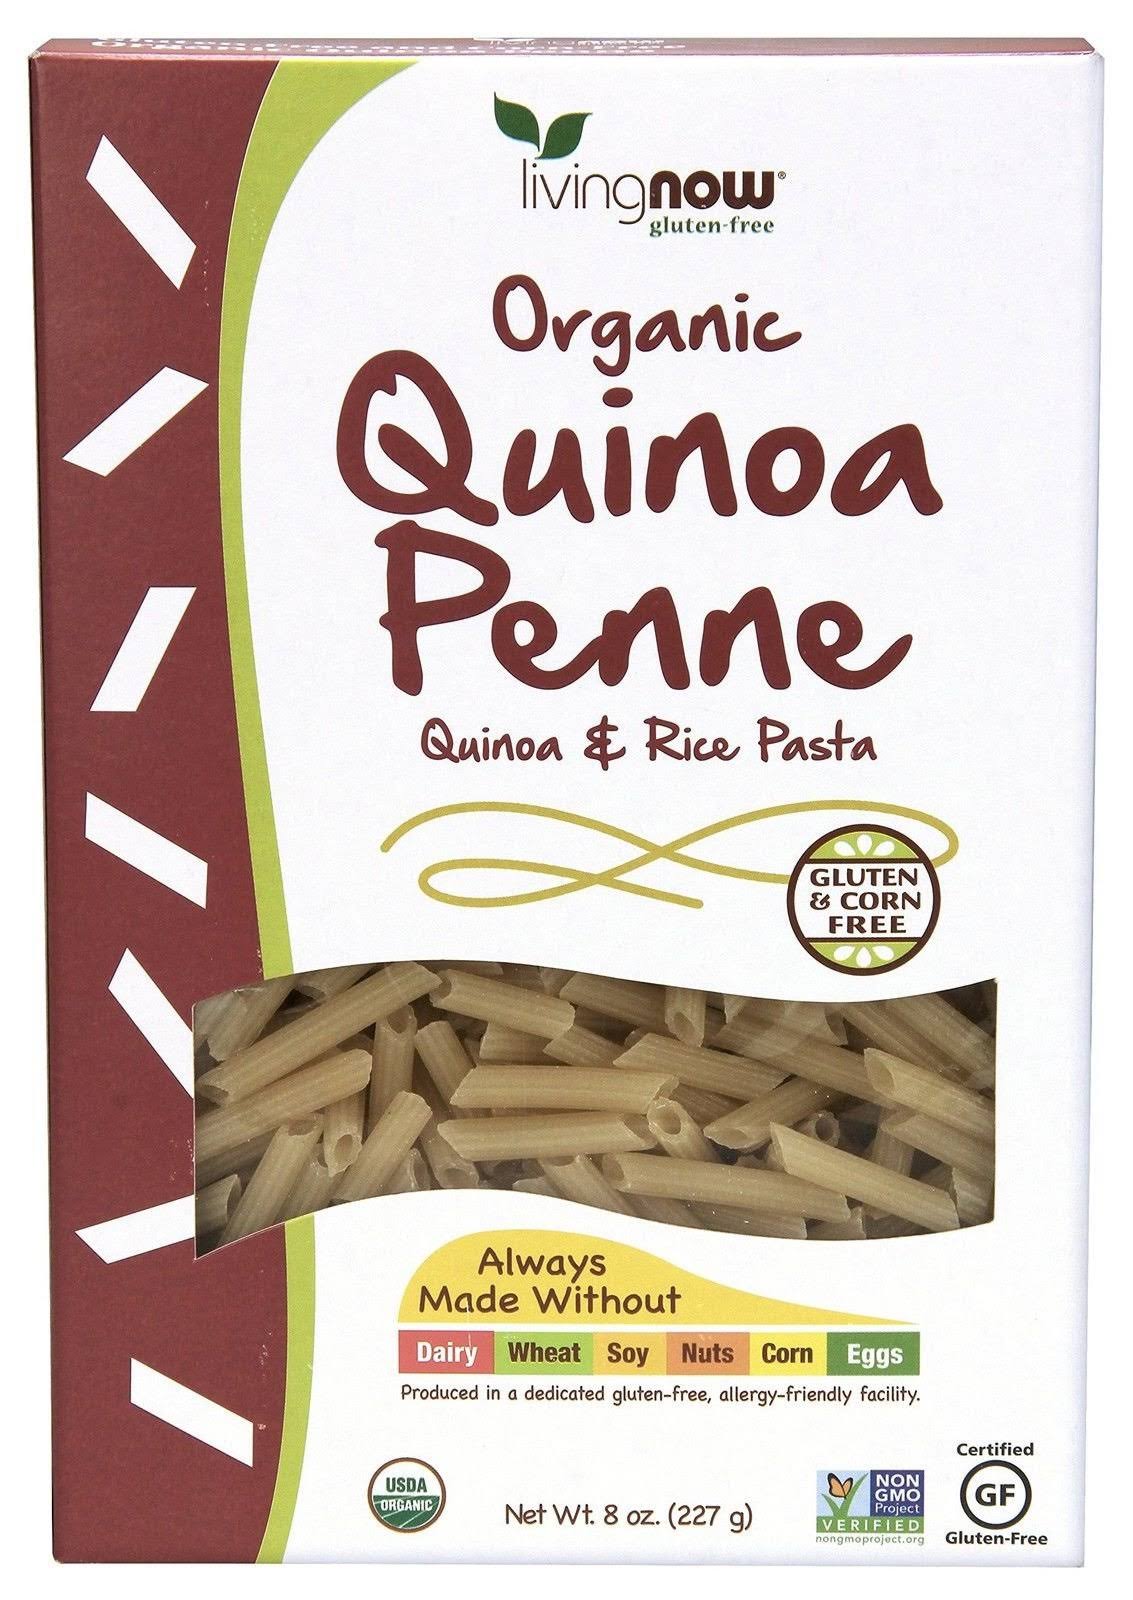 Living Now Organic Quinoa Penne